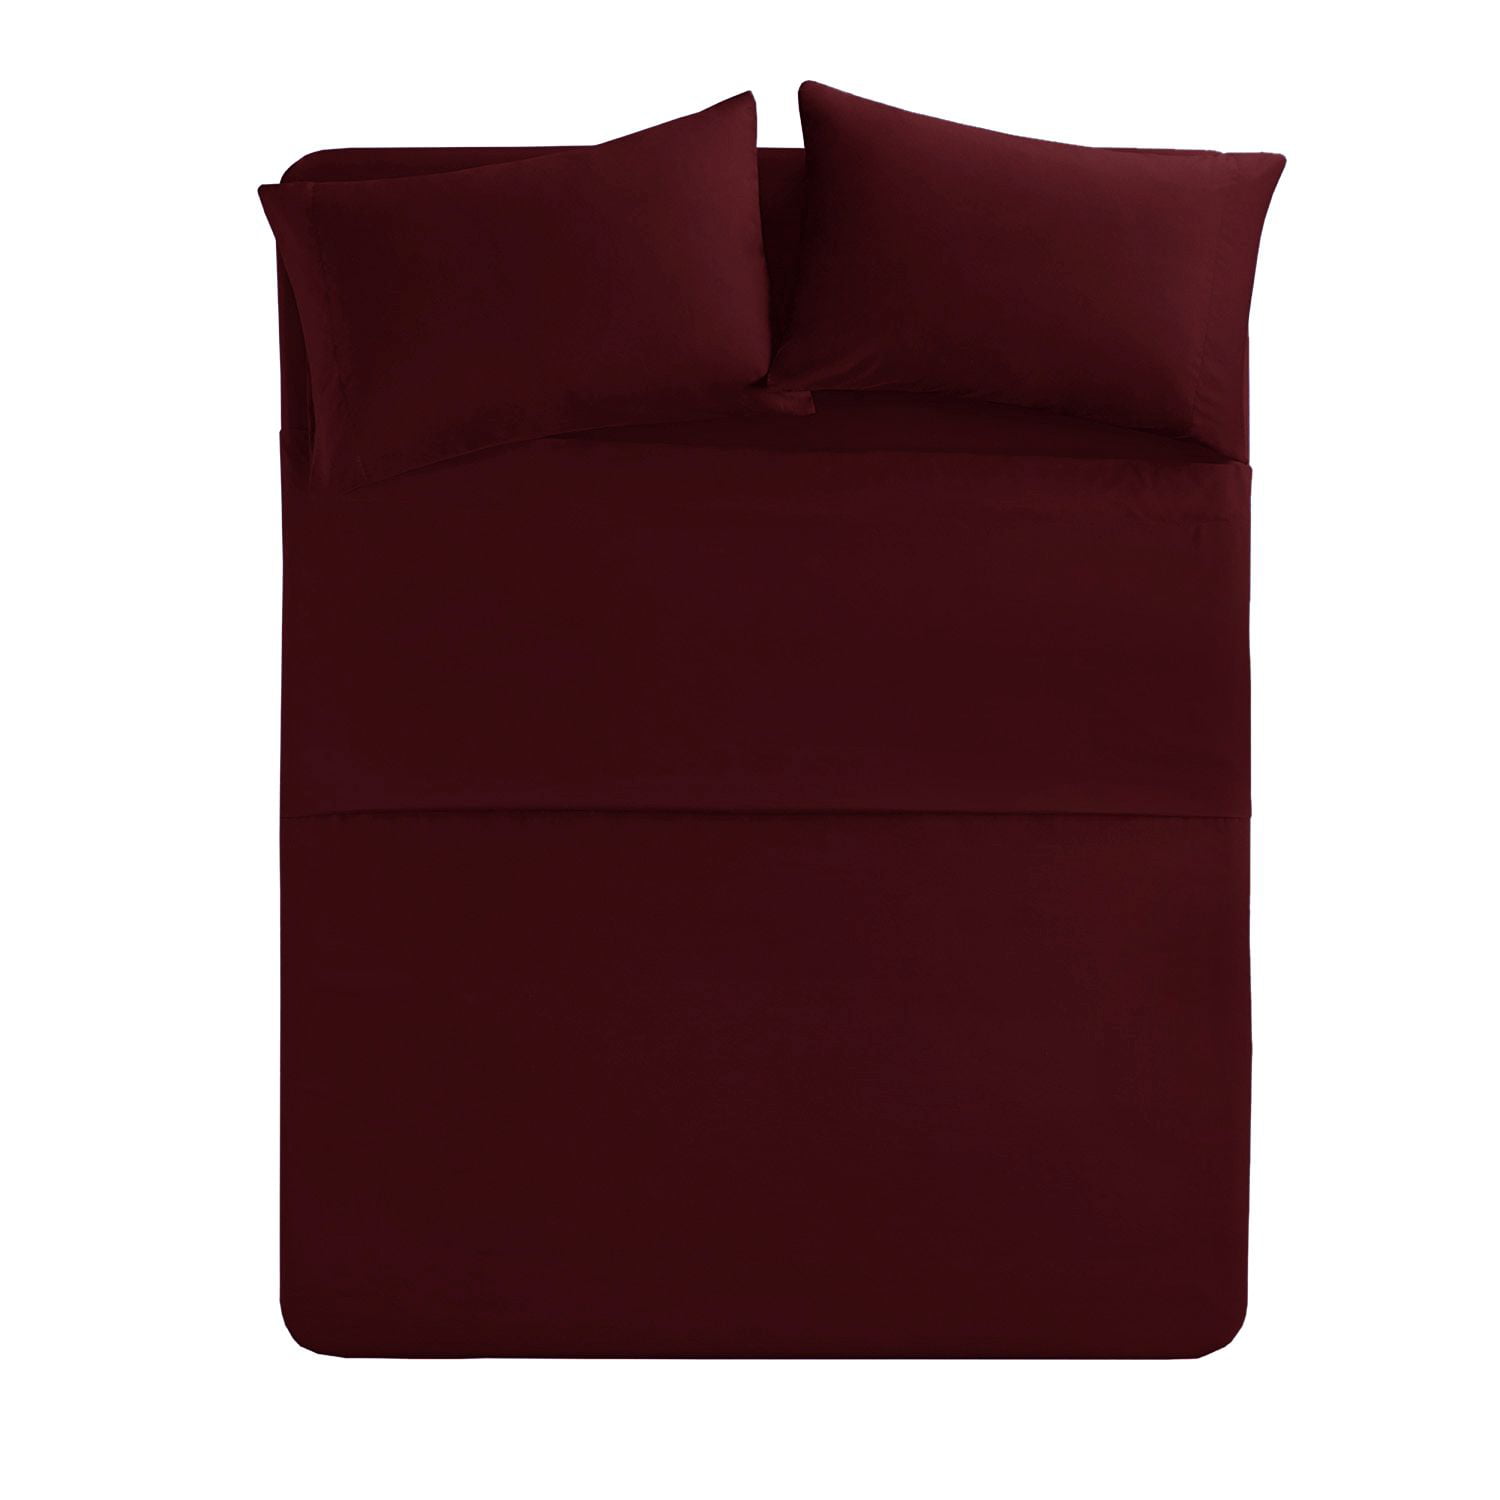 Sleeper Sofa Sheets Queen Size 62 X 74